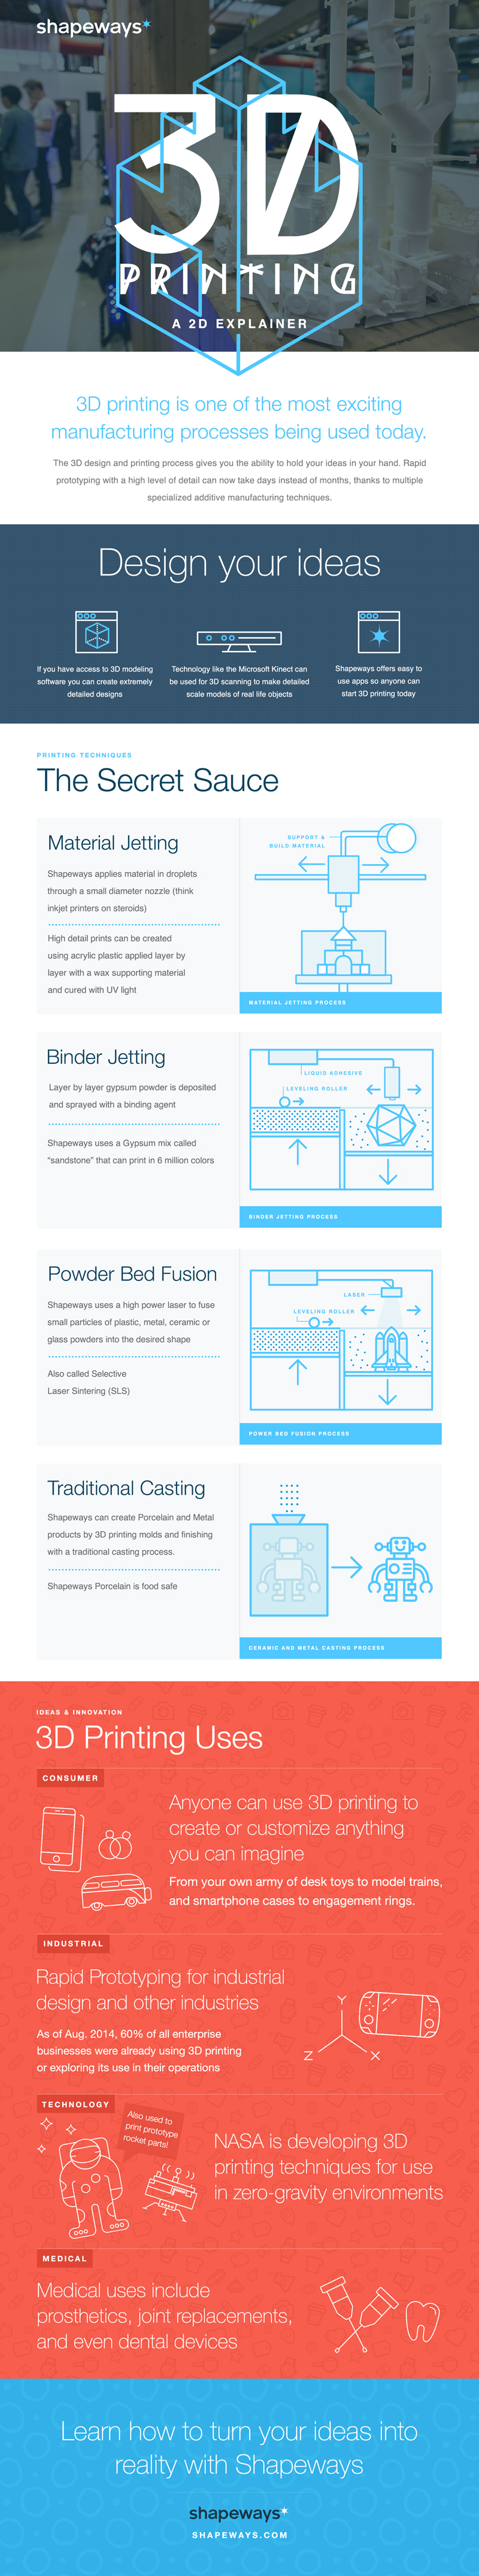 Citron Fritid sadel Additive Manufacturing (aka 3D Printing) Infographic - Bald Engineer